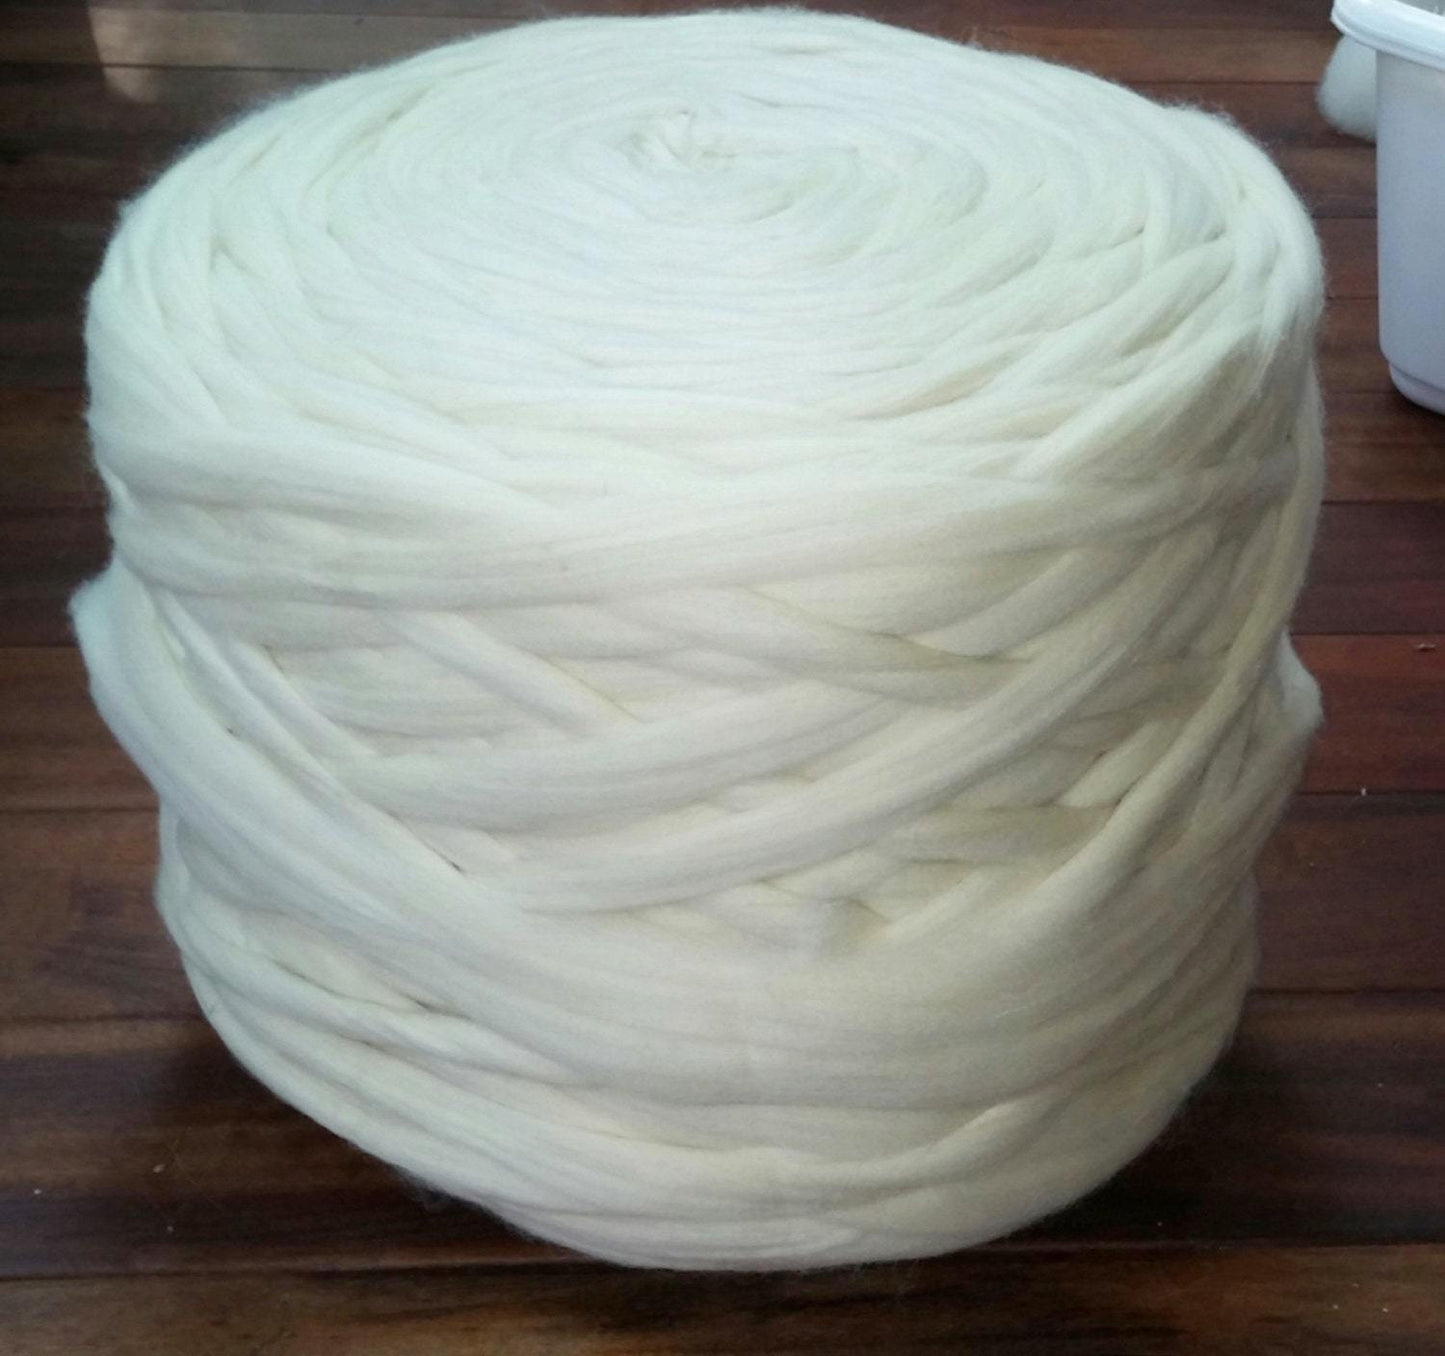 Wholesale Wool Roving, 30lbs Roll Natural White Wool Top Fiber Spinning, Felting, Knitting, Weaving Wool supplies Wool Bump Wool Supplier